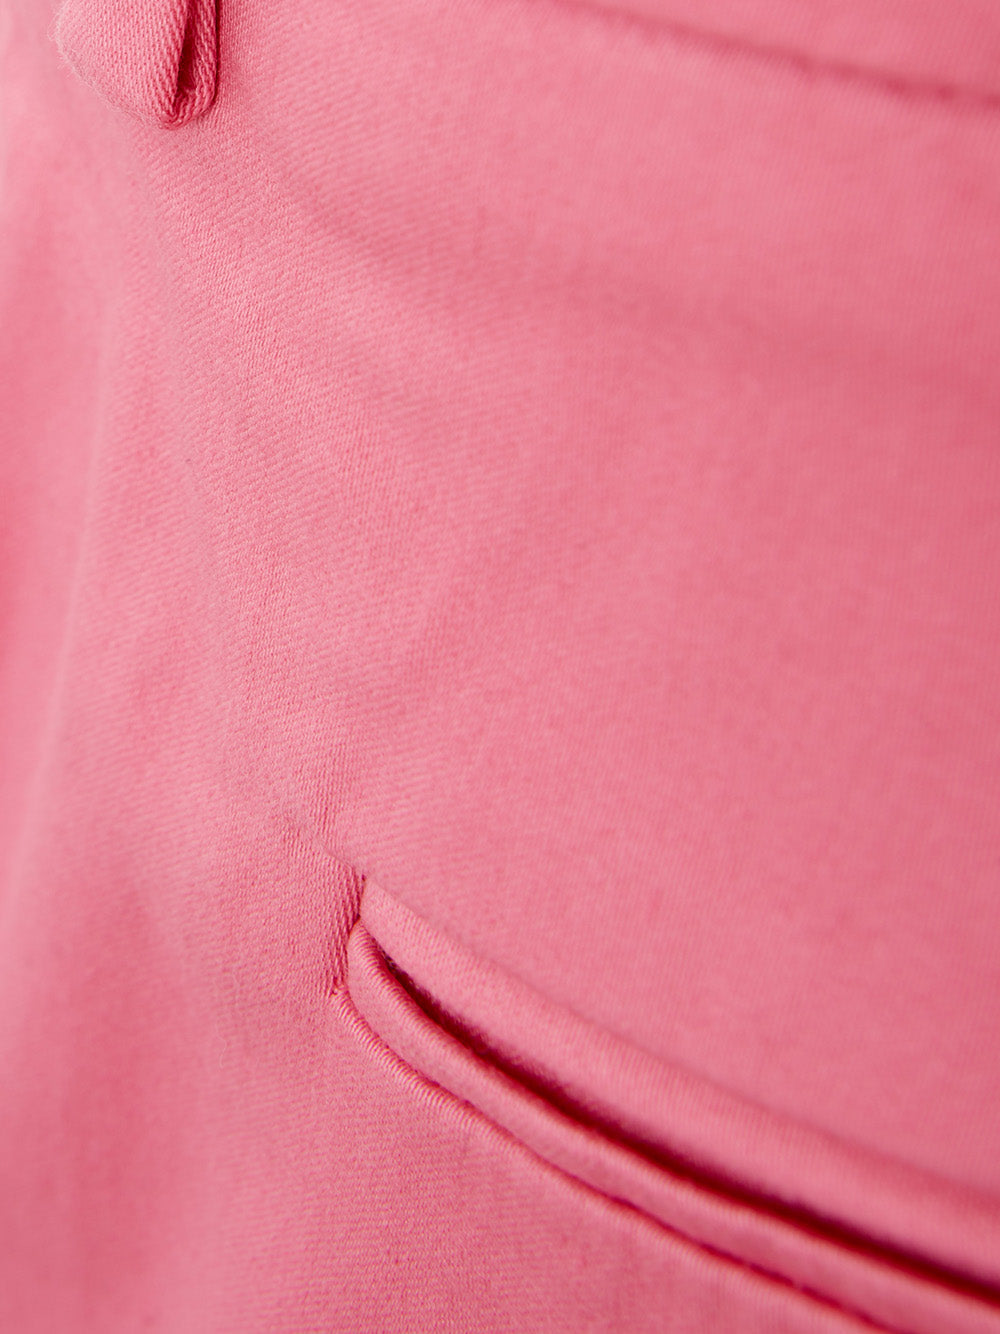 Pink Cotton Trouser